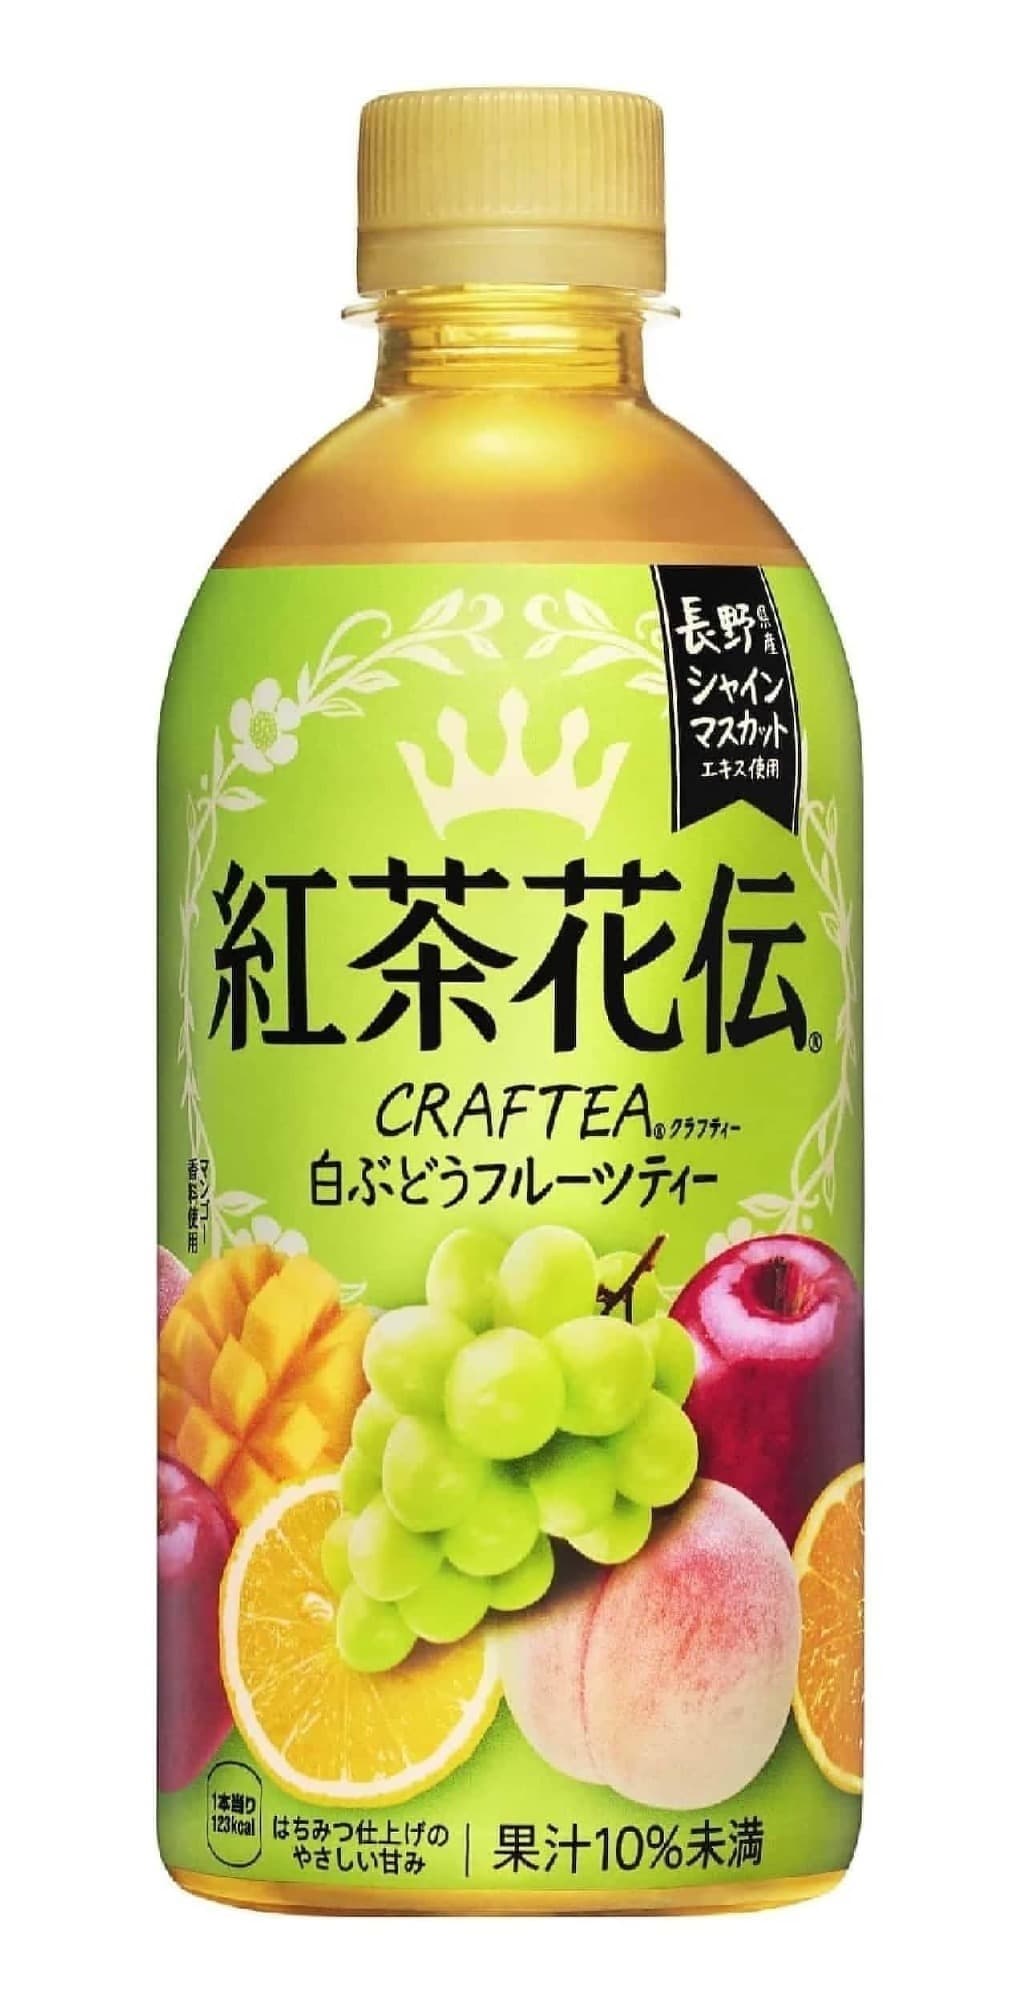 Kocha Kaden Krafty White Grape Fruit Tea, a black tea brand.